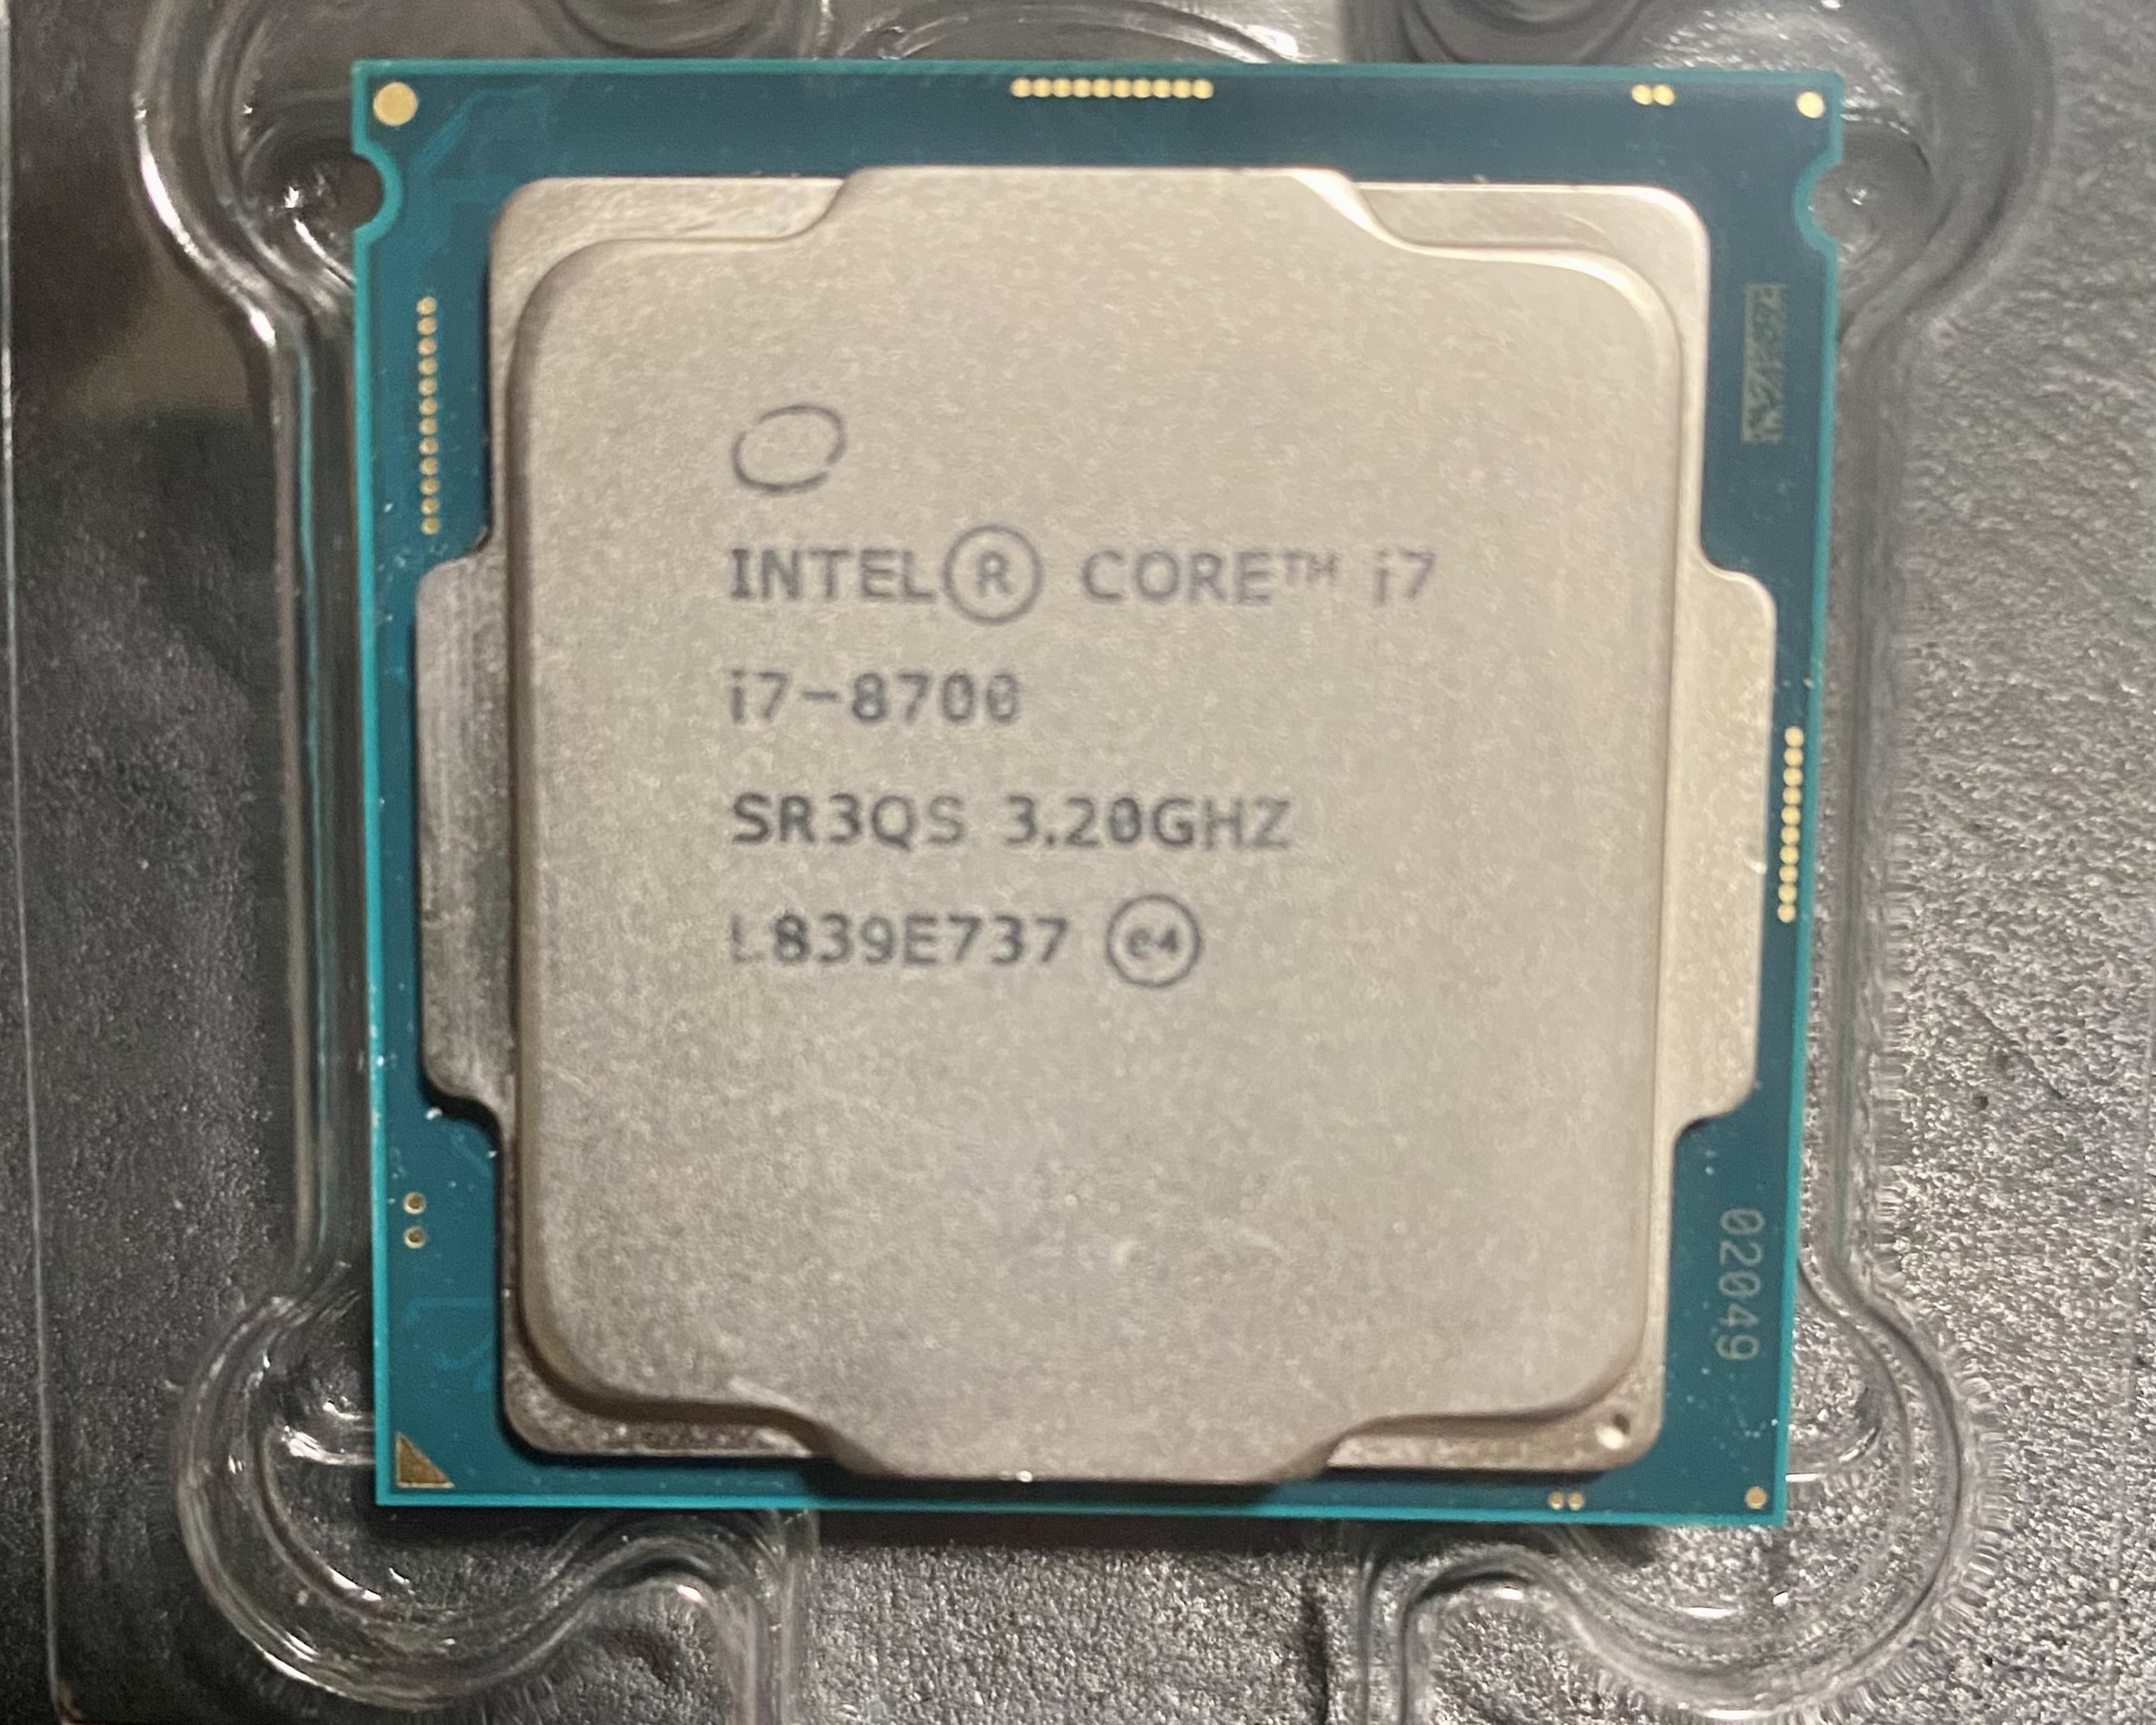 Intel i7-8700 SR3QS 3.20GHz 6 cores 12 threads